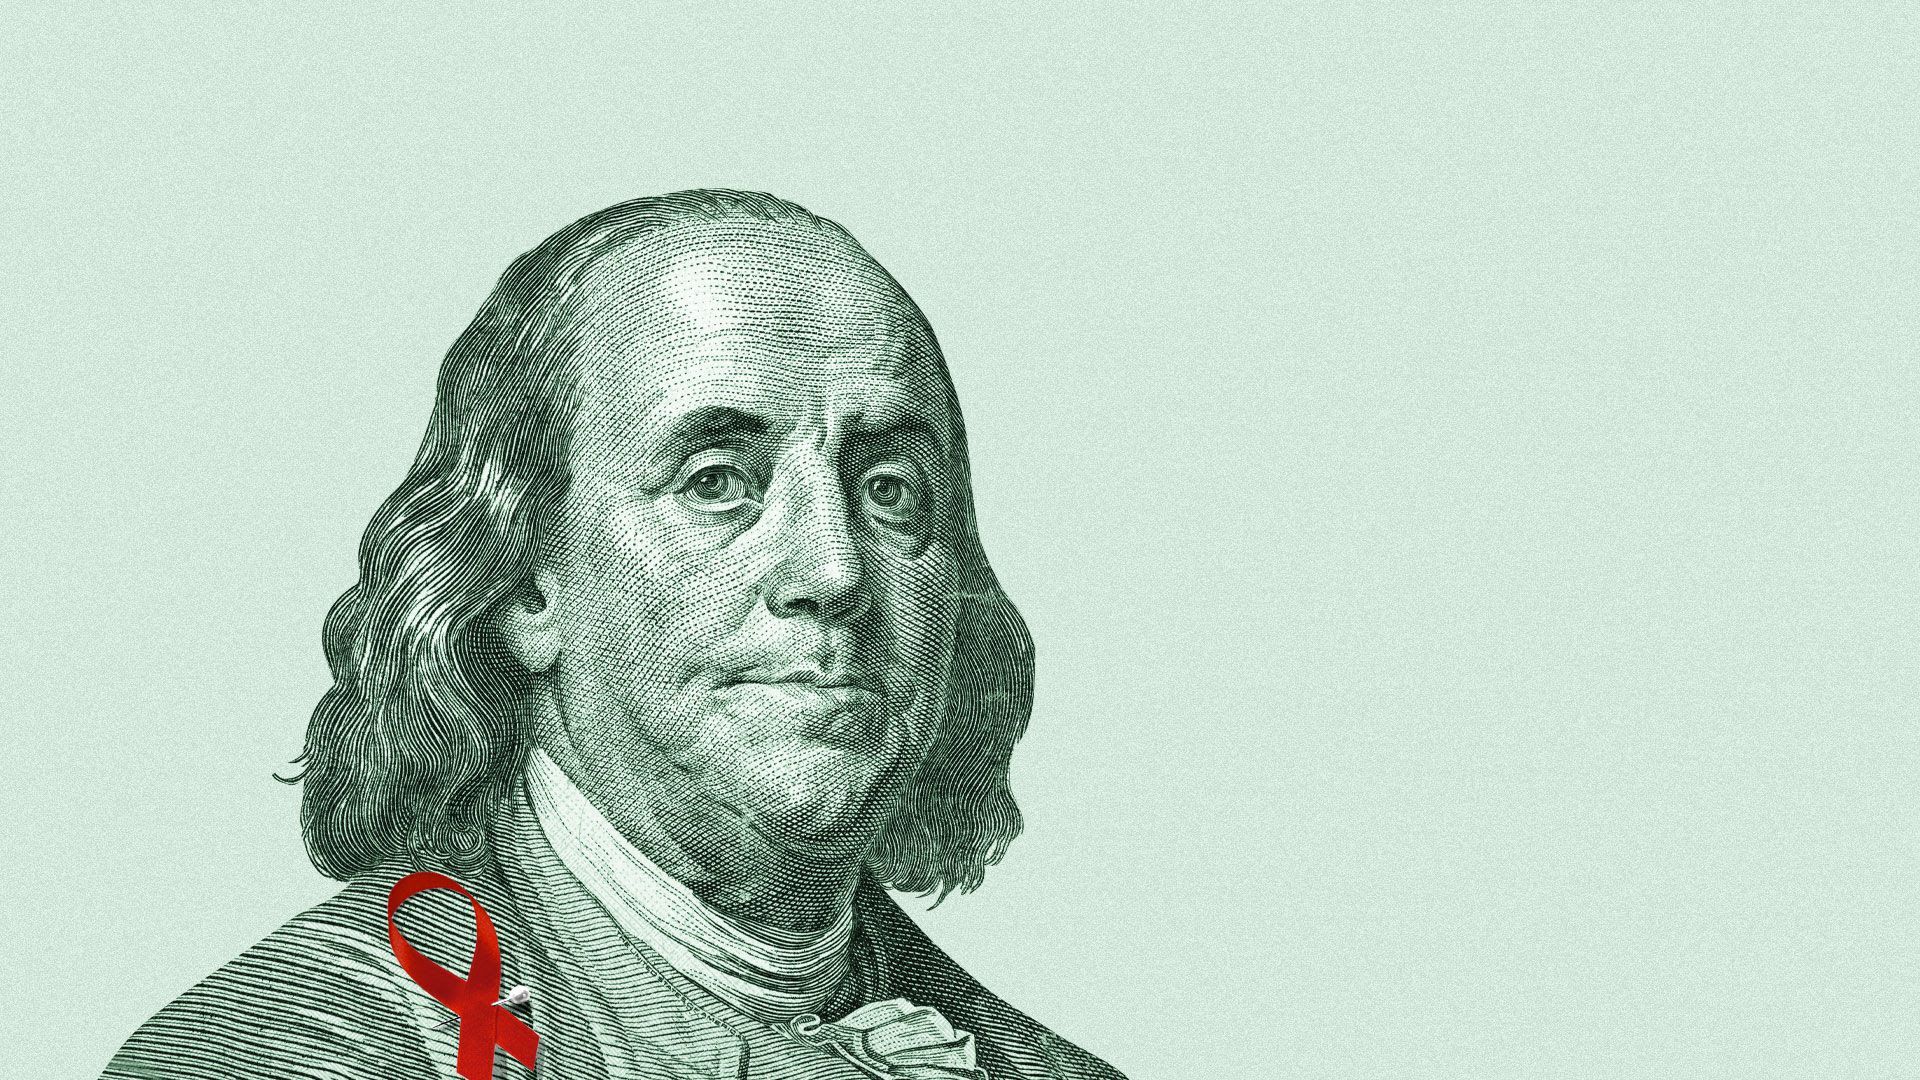 An illustration of Benjamin Franklin wearing a giving ribbon